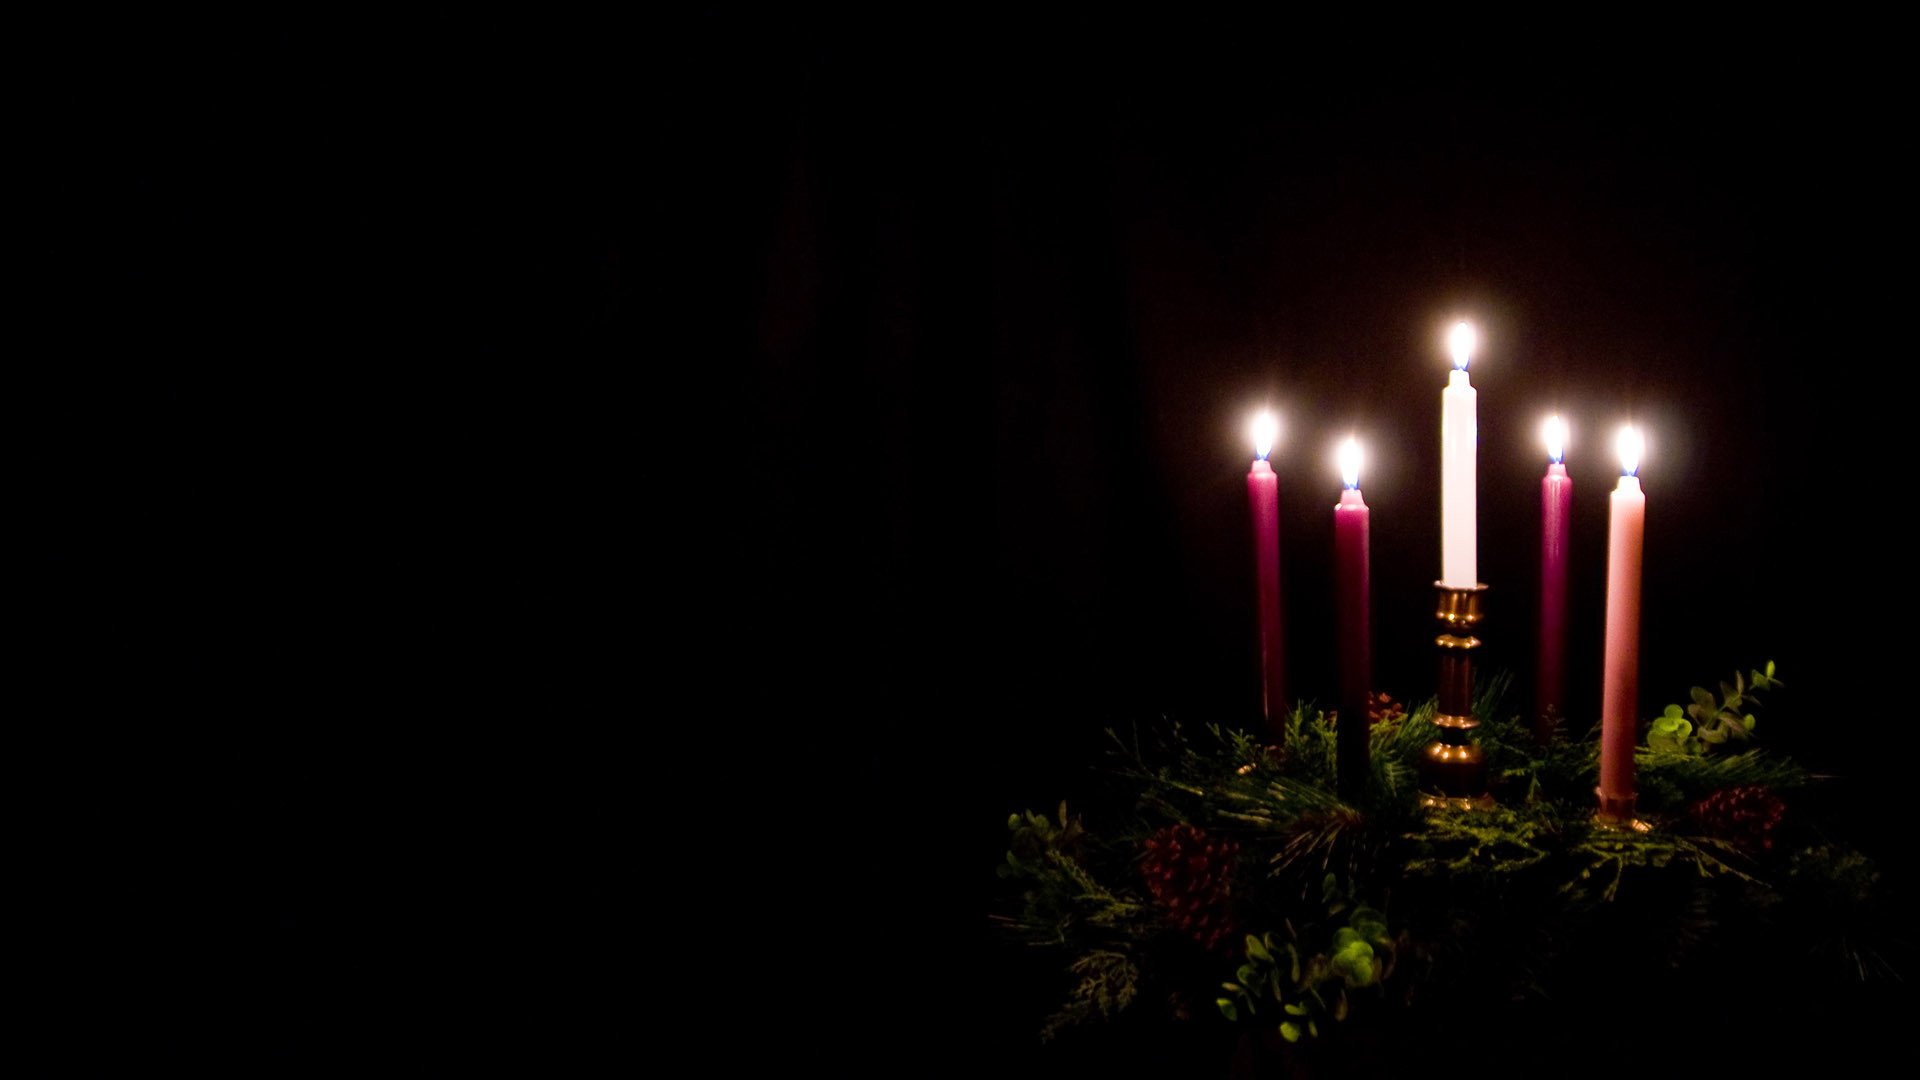 Advent Images - Celebrate the Joyful Season